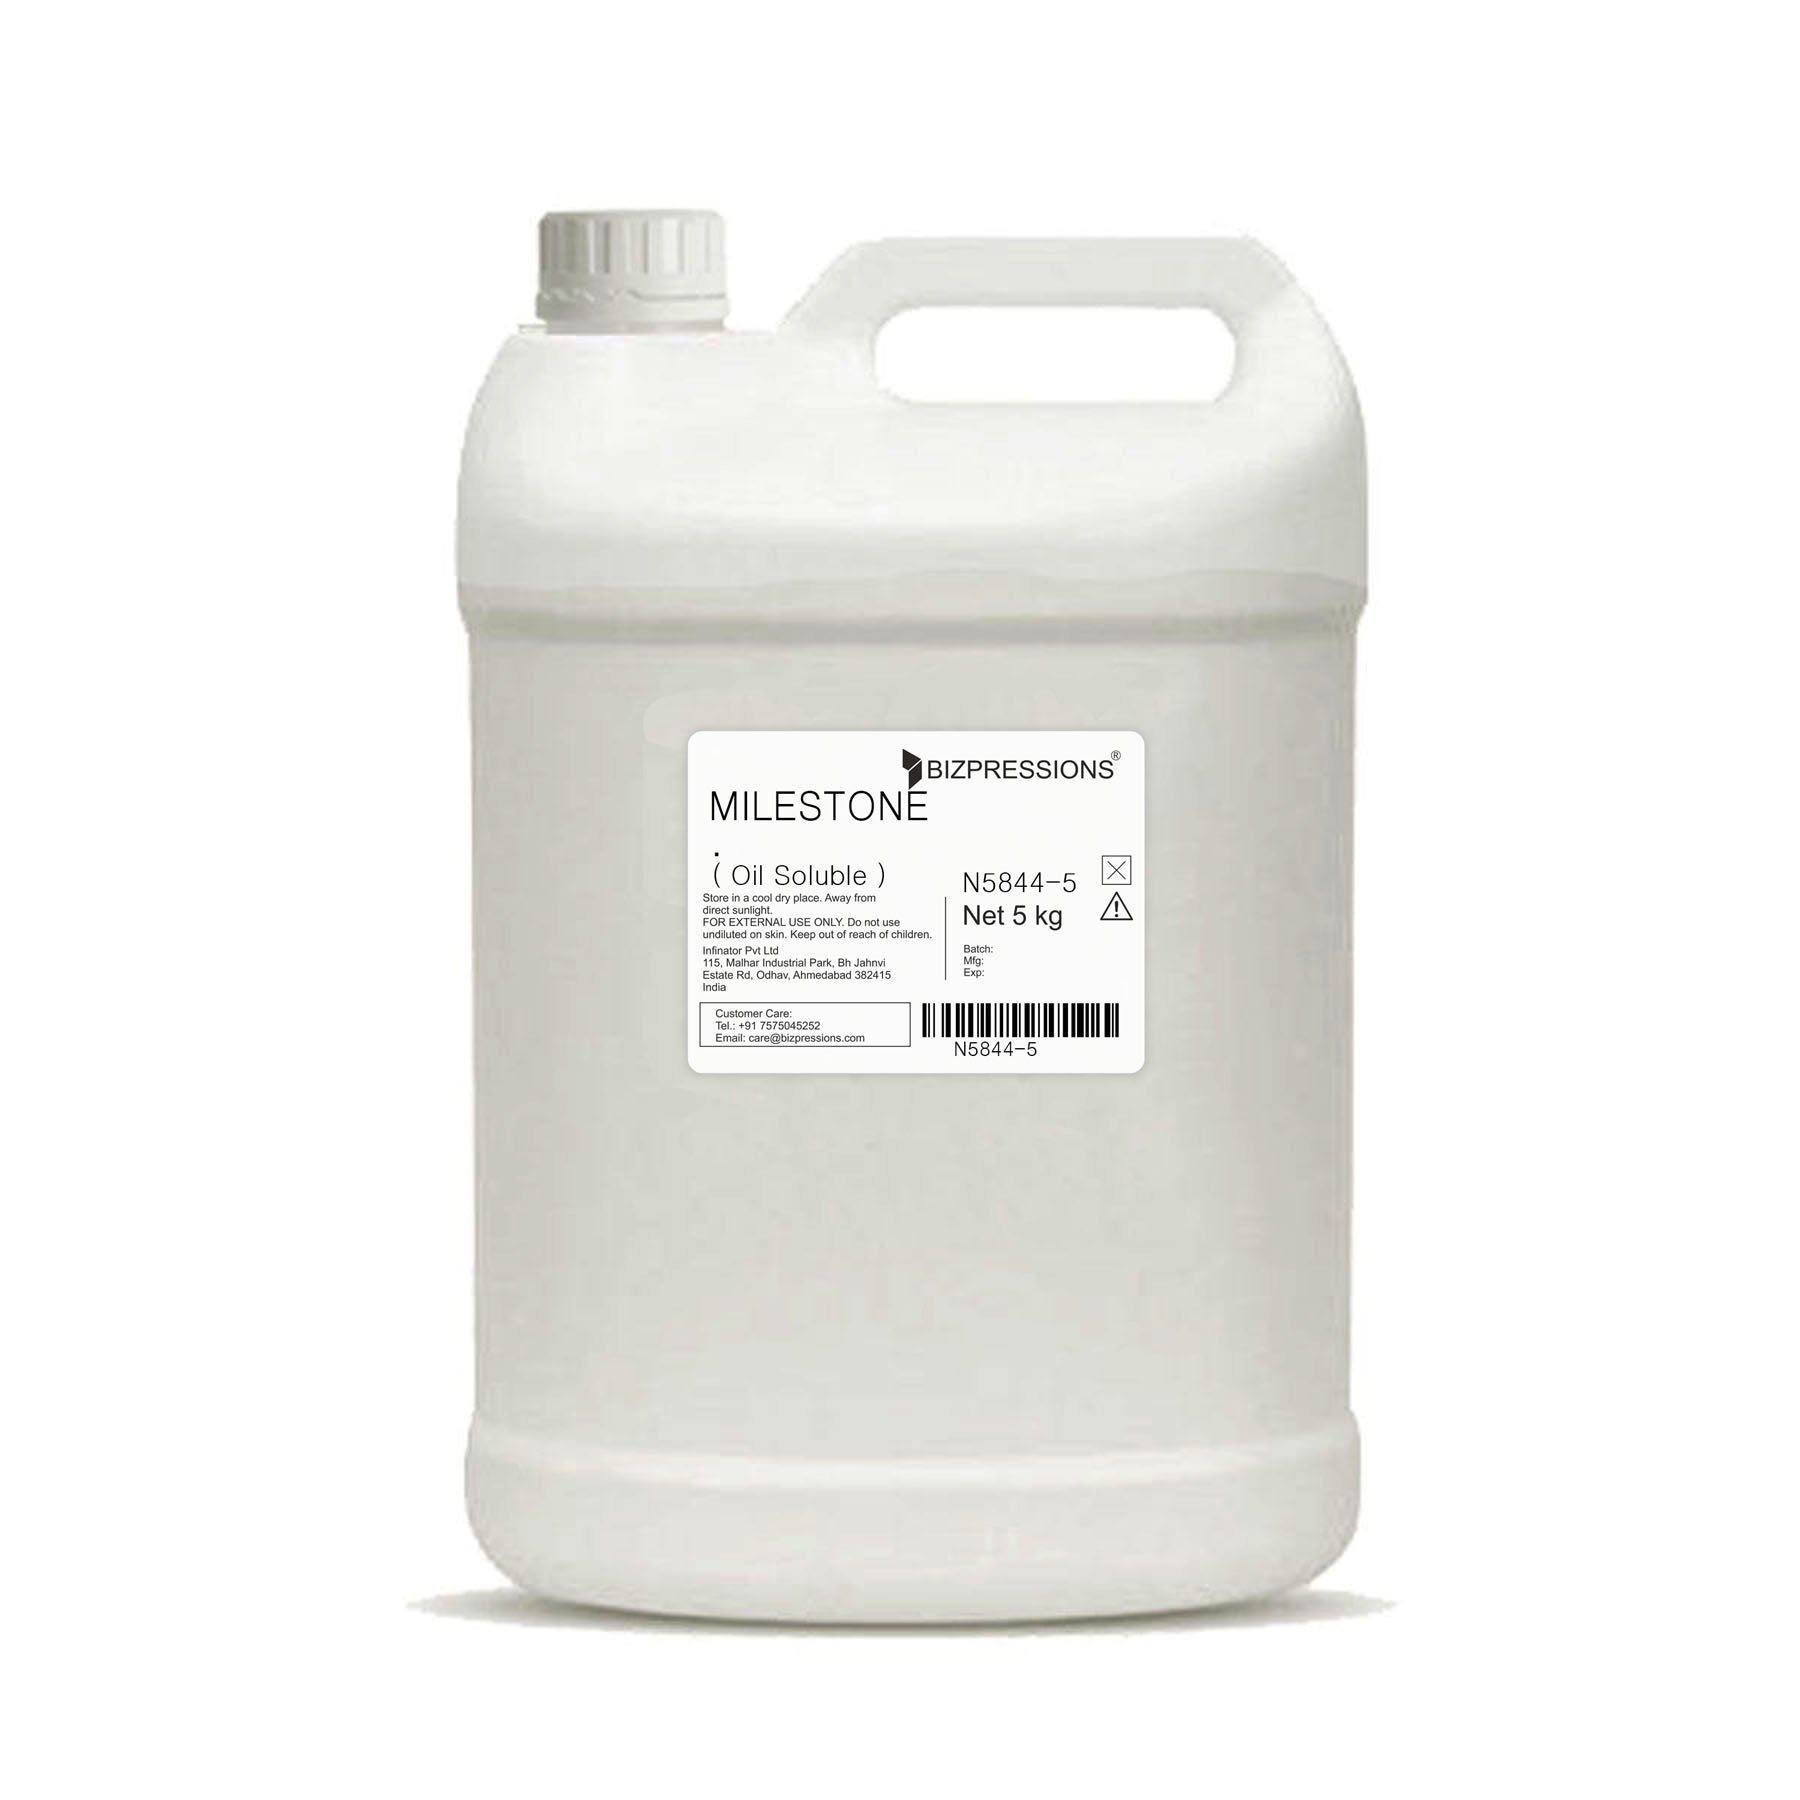 MILESTONE - Fragrance ( Oil Soluble ) - 5 kg